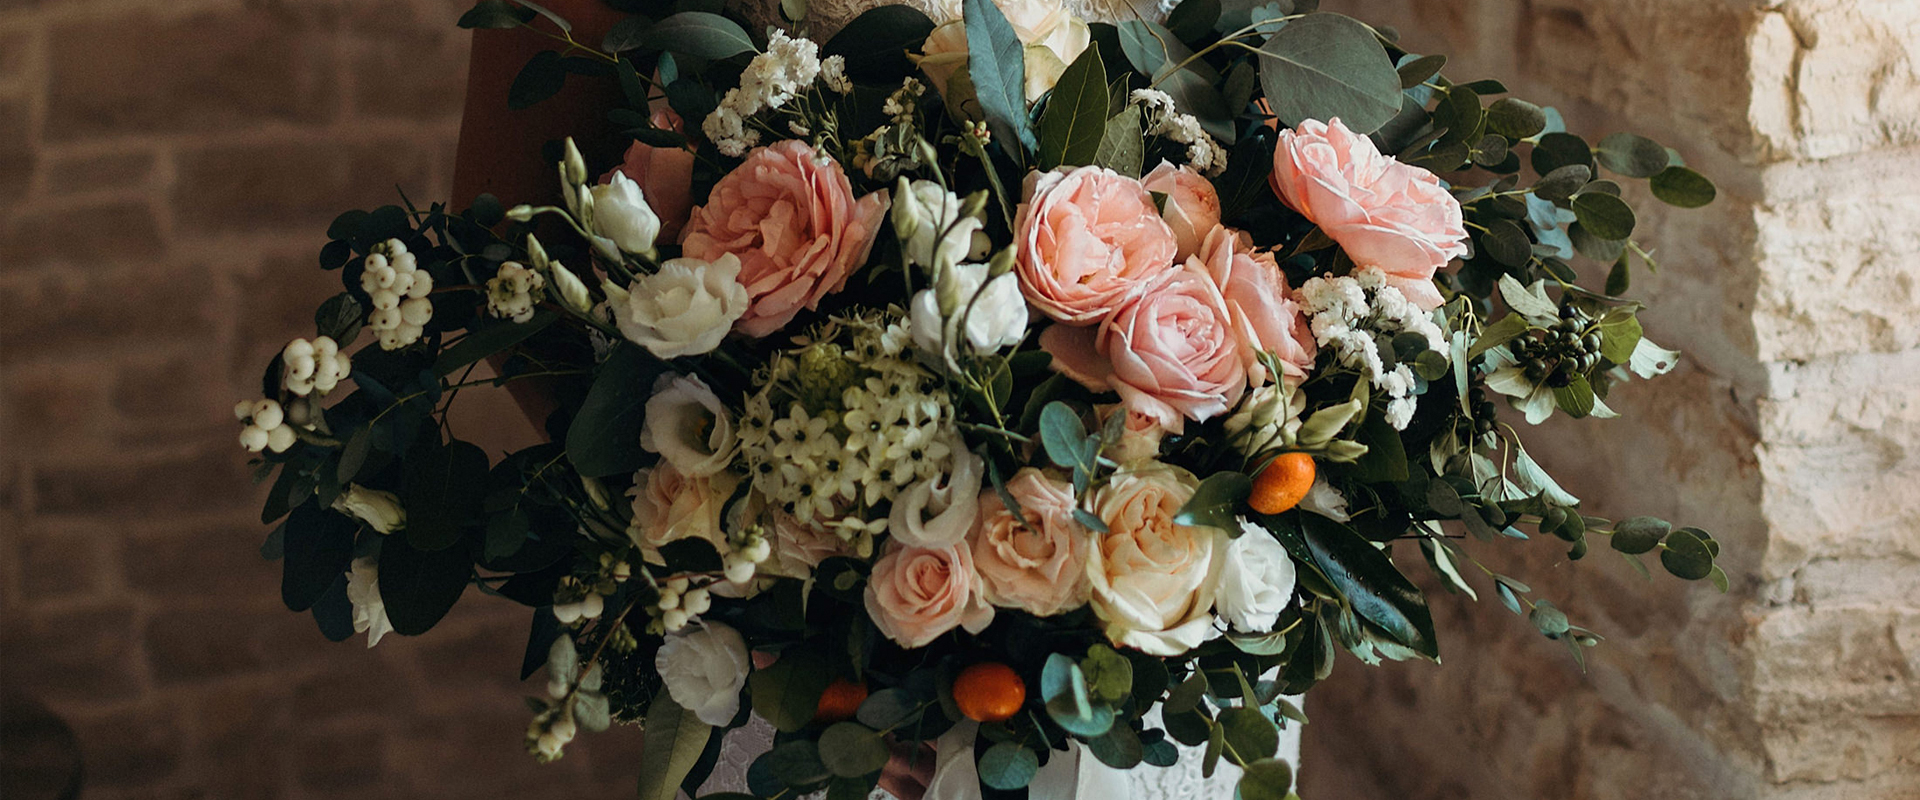 Top 10 wedding flowers